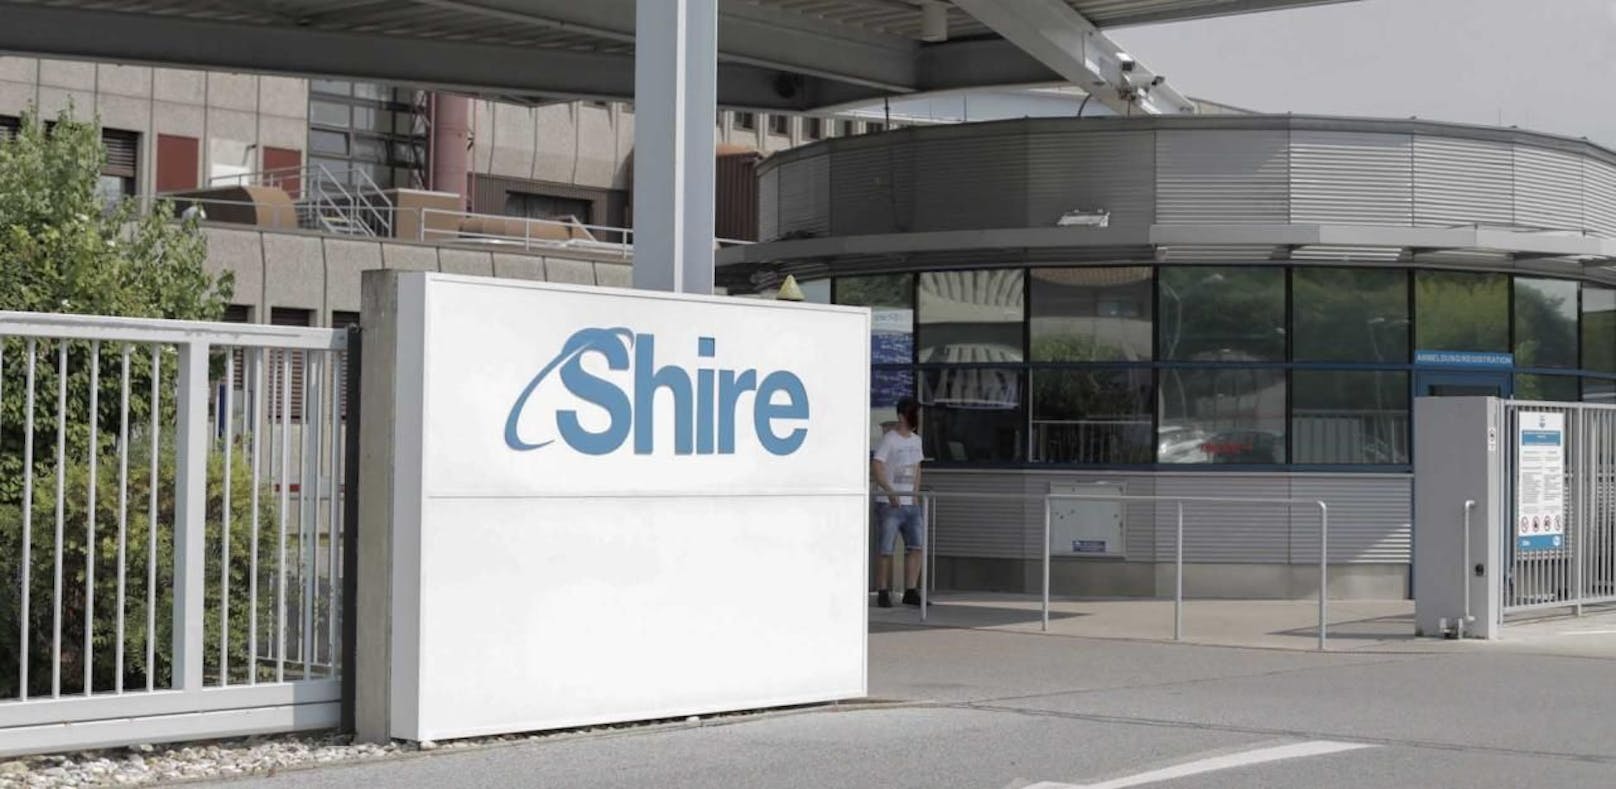 Shire-Kündigungswelle: Landesrat fordert Stiftung